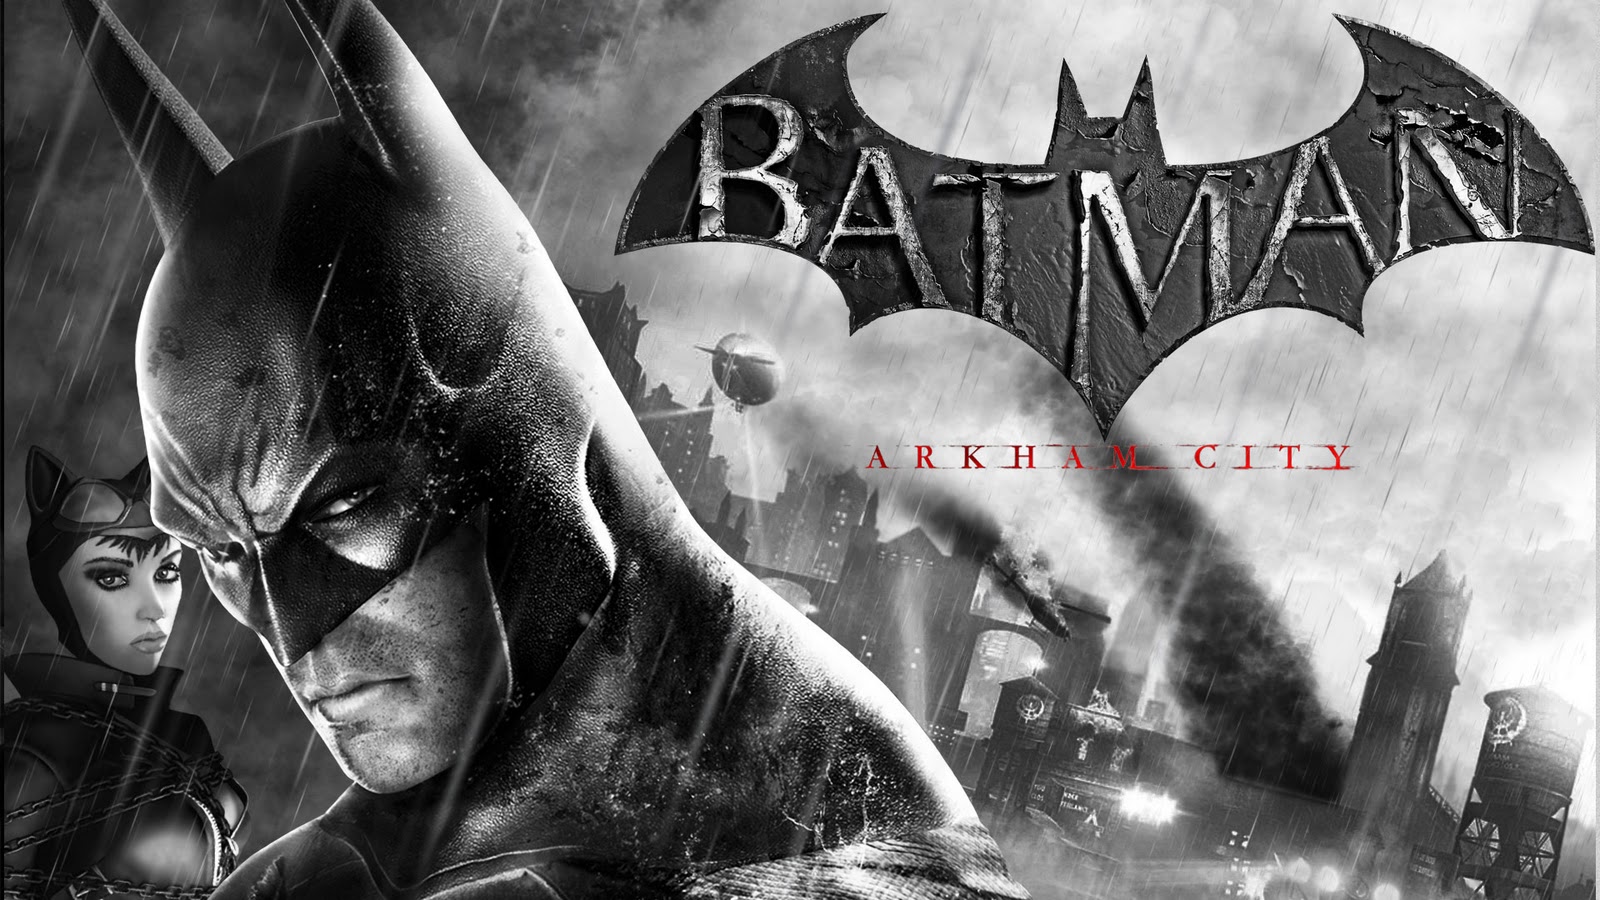 Batman Arkham City Wallpaper Images amp Pictures   Becuo